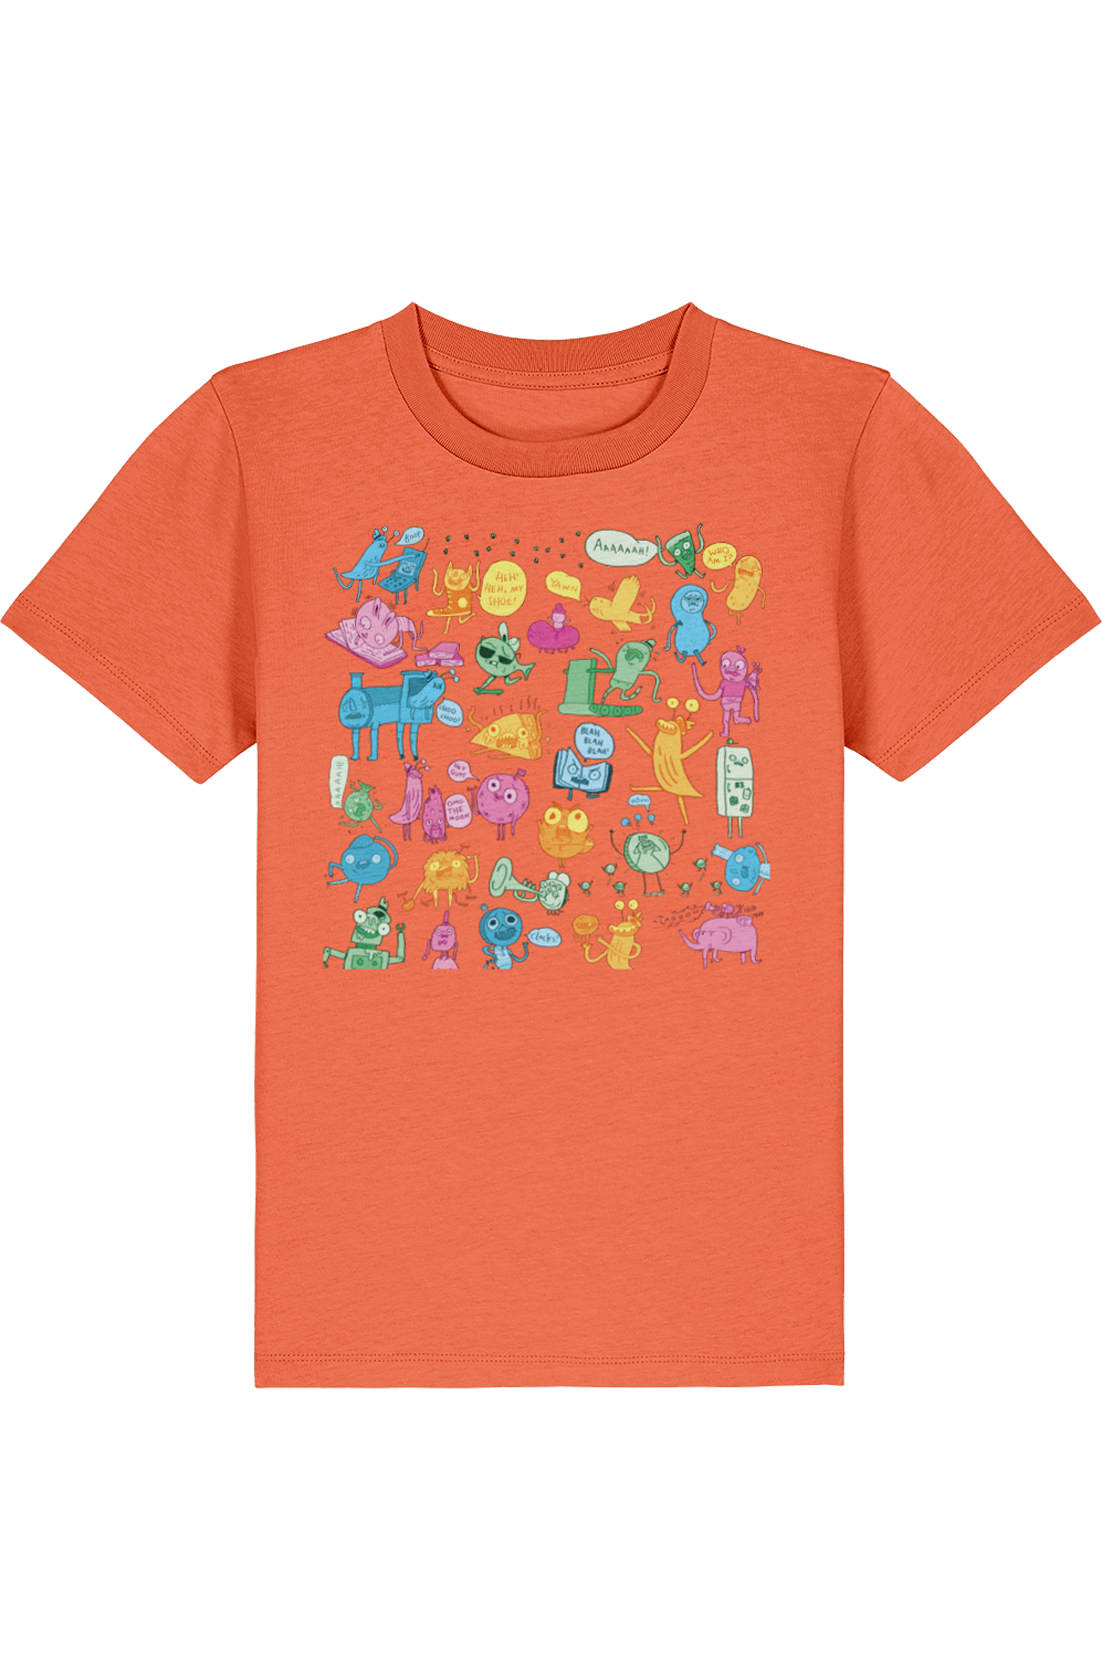 Doug Slugman P.I. Character Mix-up Mono kids t-shirt